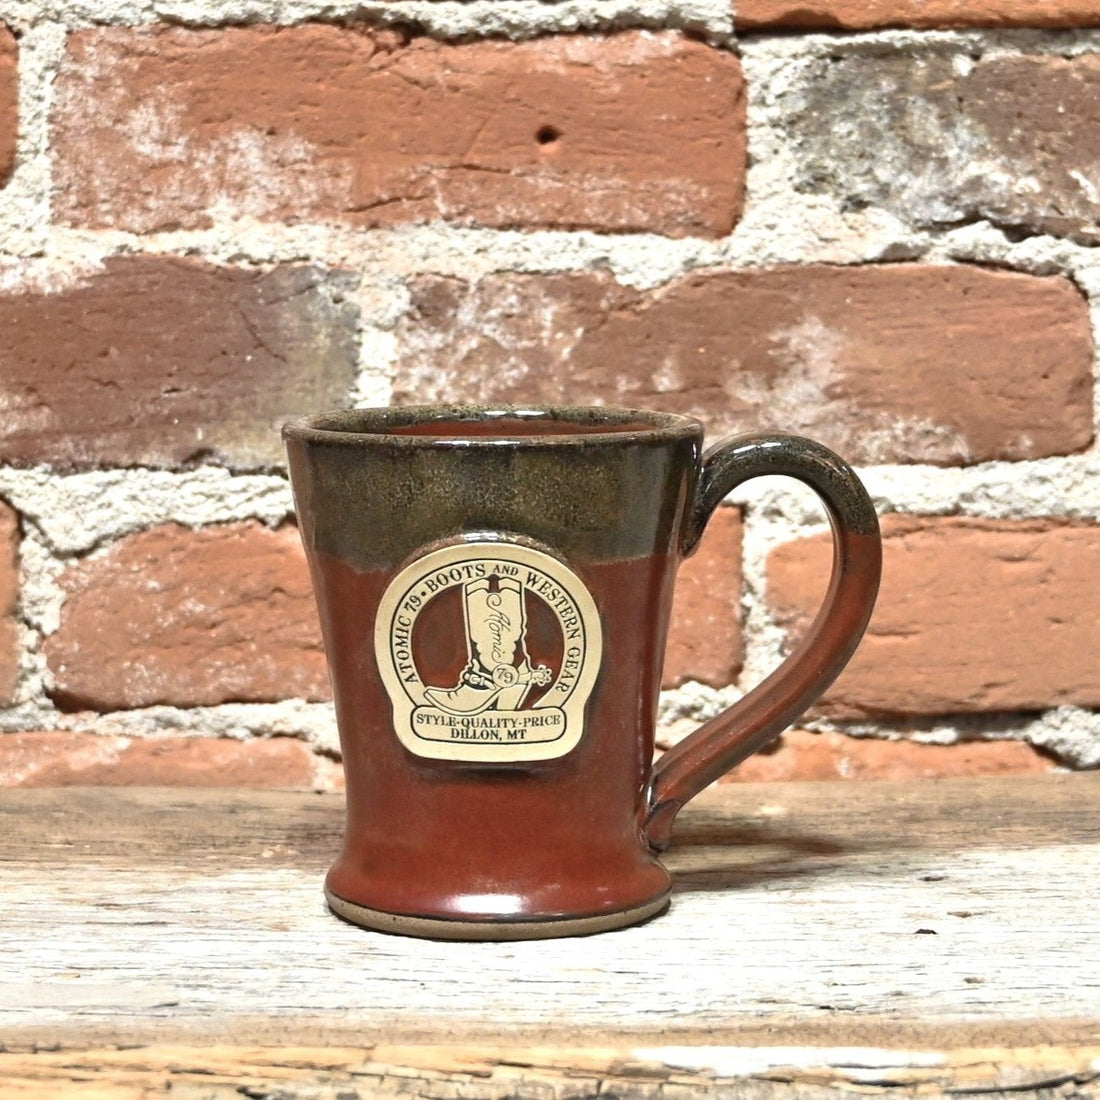 Renaissance Boyager in Brick Red view of mug